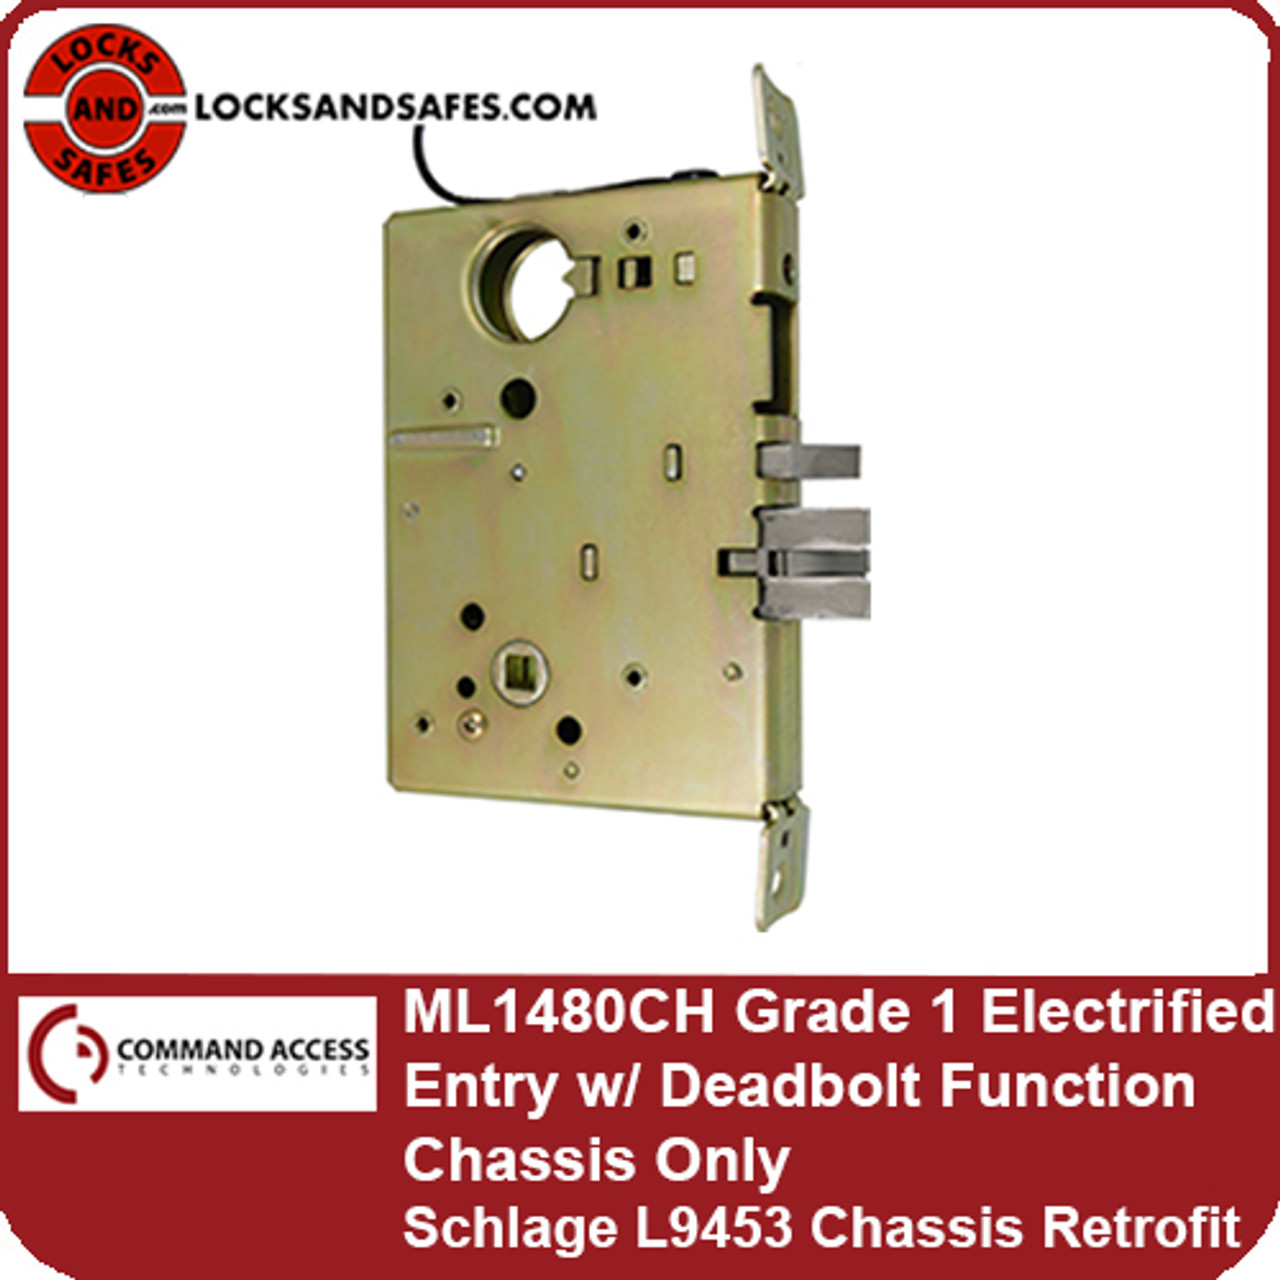 Schlage L Series Mortise Lockset, Storeroom Function w/ Deadbolt, Lockbody  Only